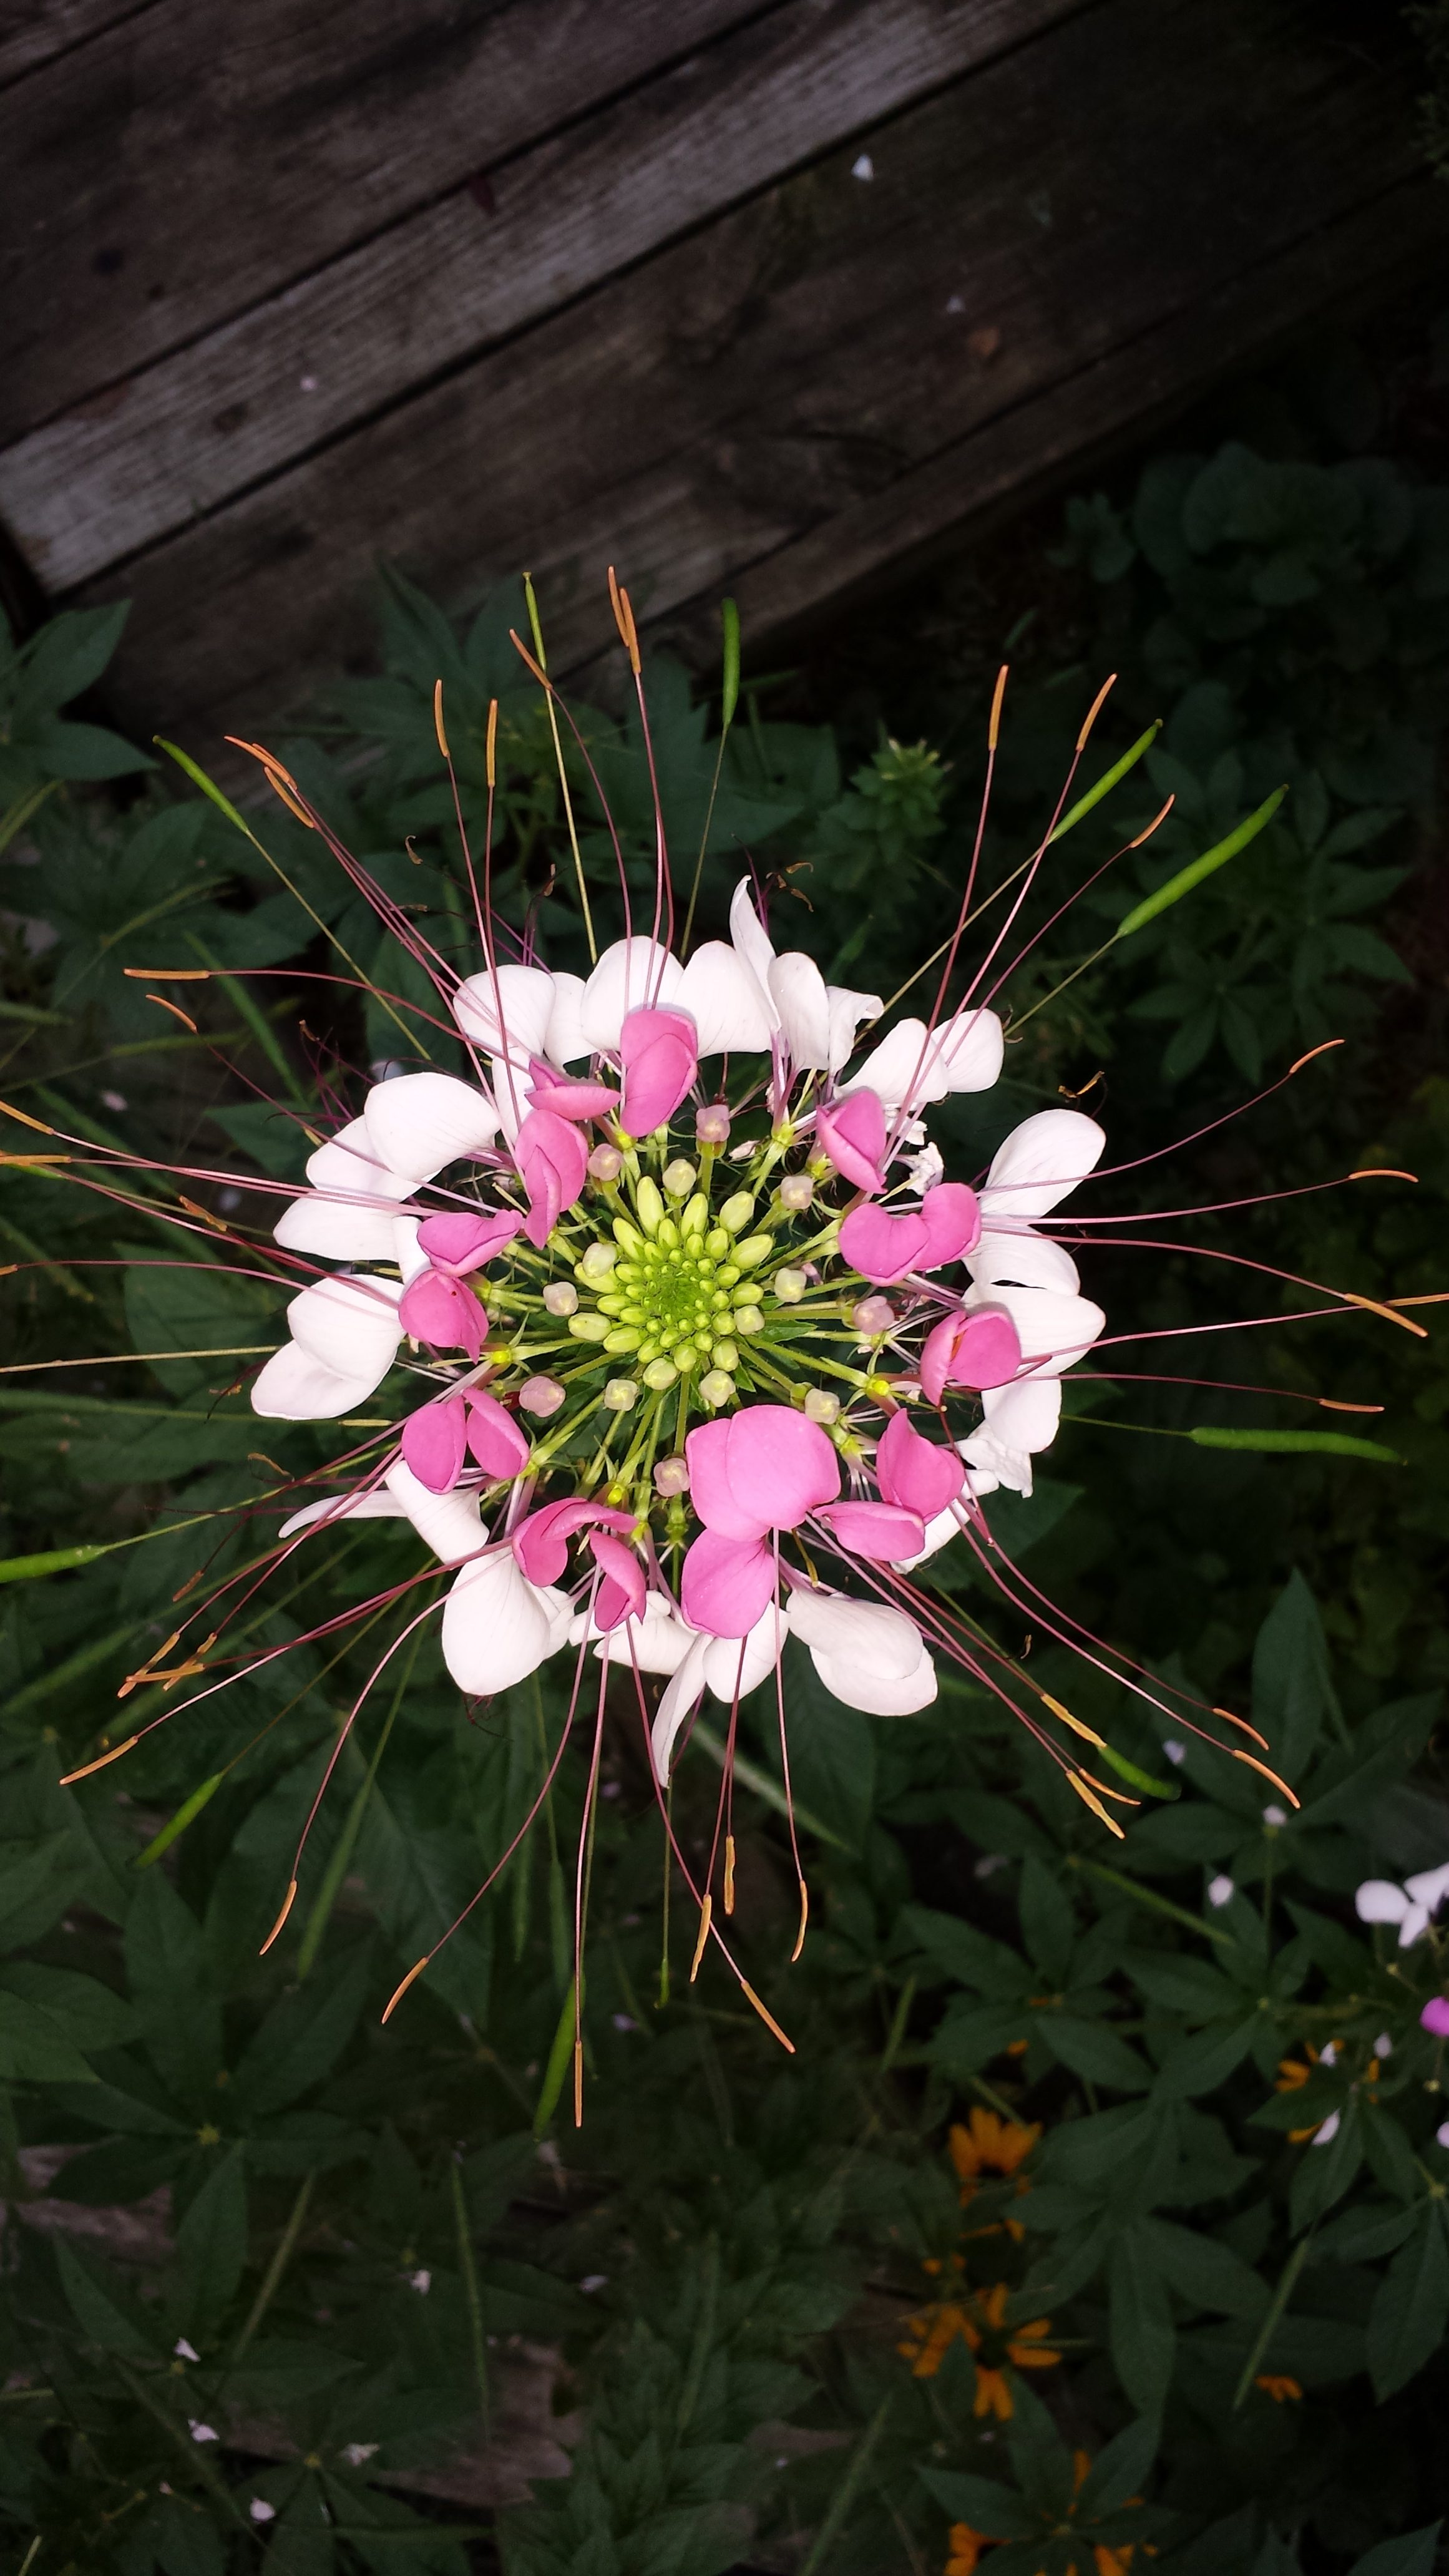 Cleome - Spider Flower